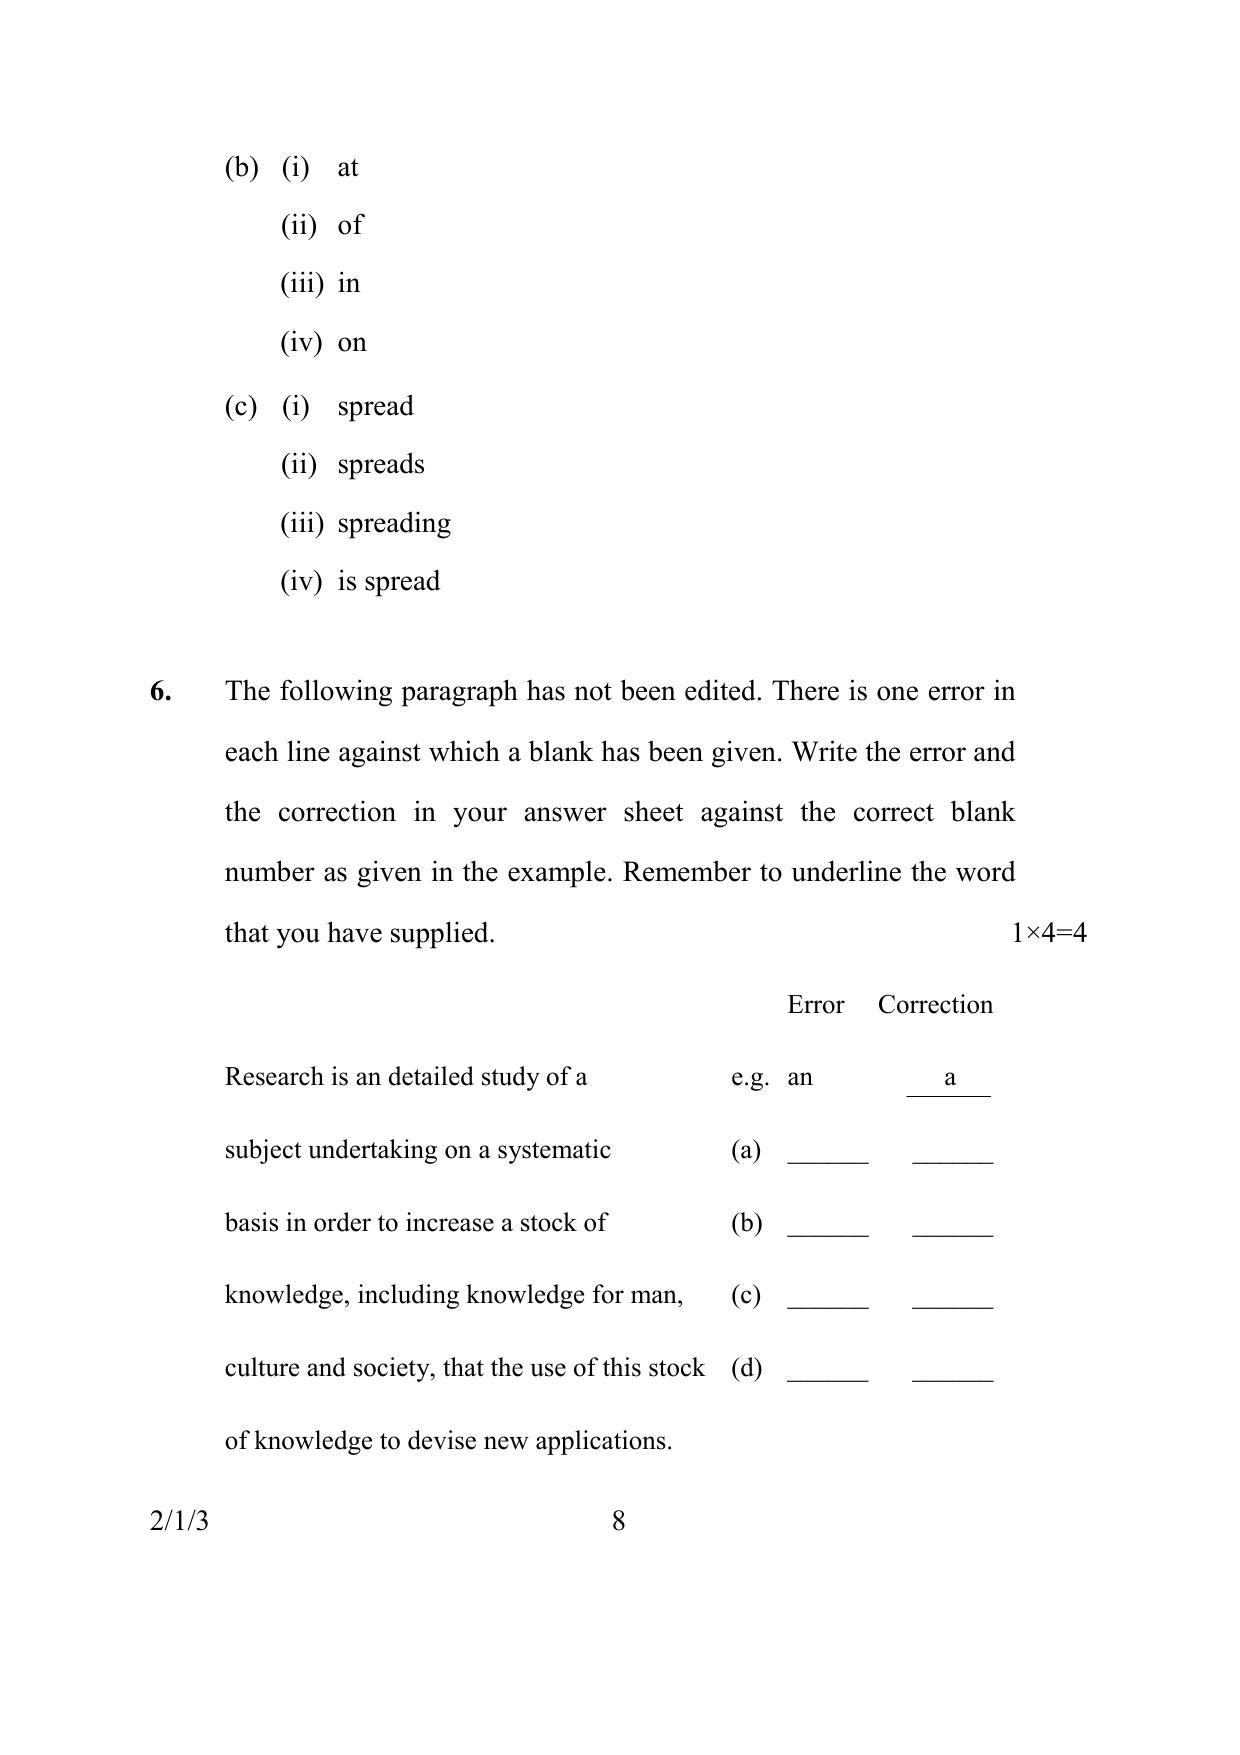 CBSE Class 10 2-1-3 ENGLISH LANGUAGE & LIT. 2016 Question Paper - Page 8